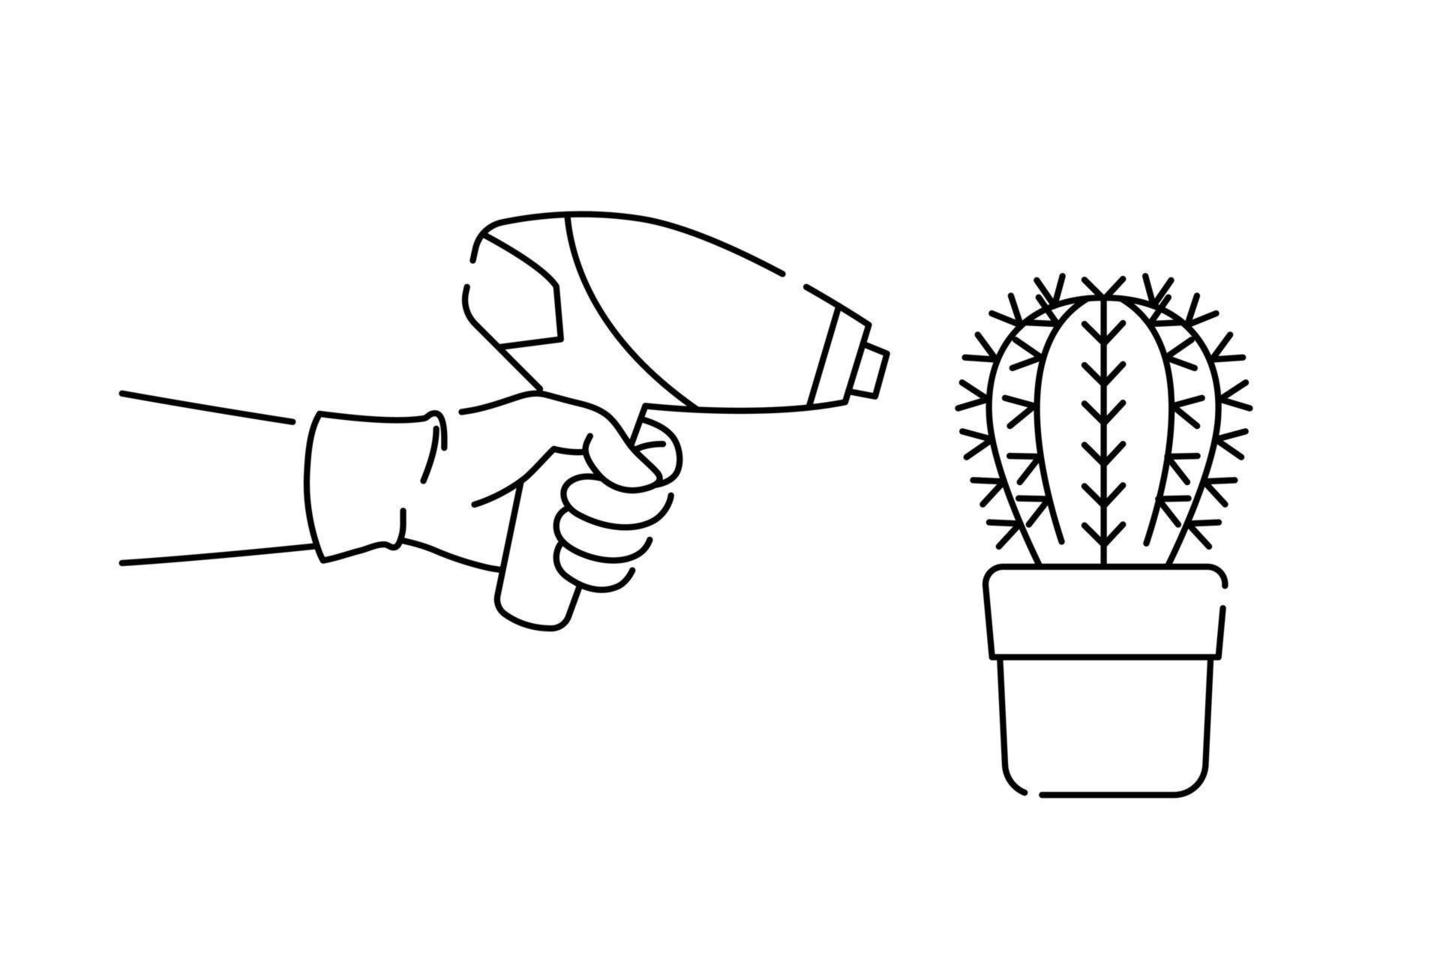 Hand wearing rubber gloves holding laser epilator doing cactus hair removal, laser epilation, idea concept. Vector design illustration.